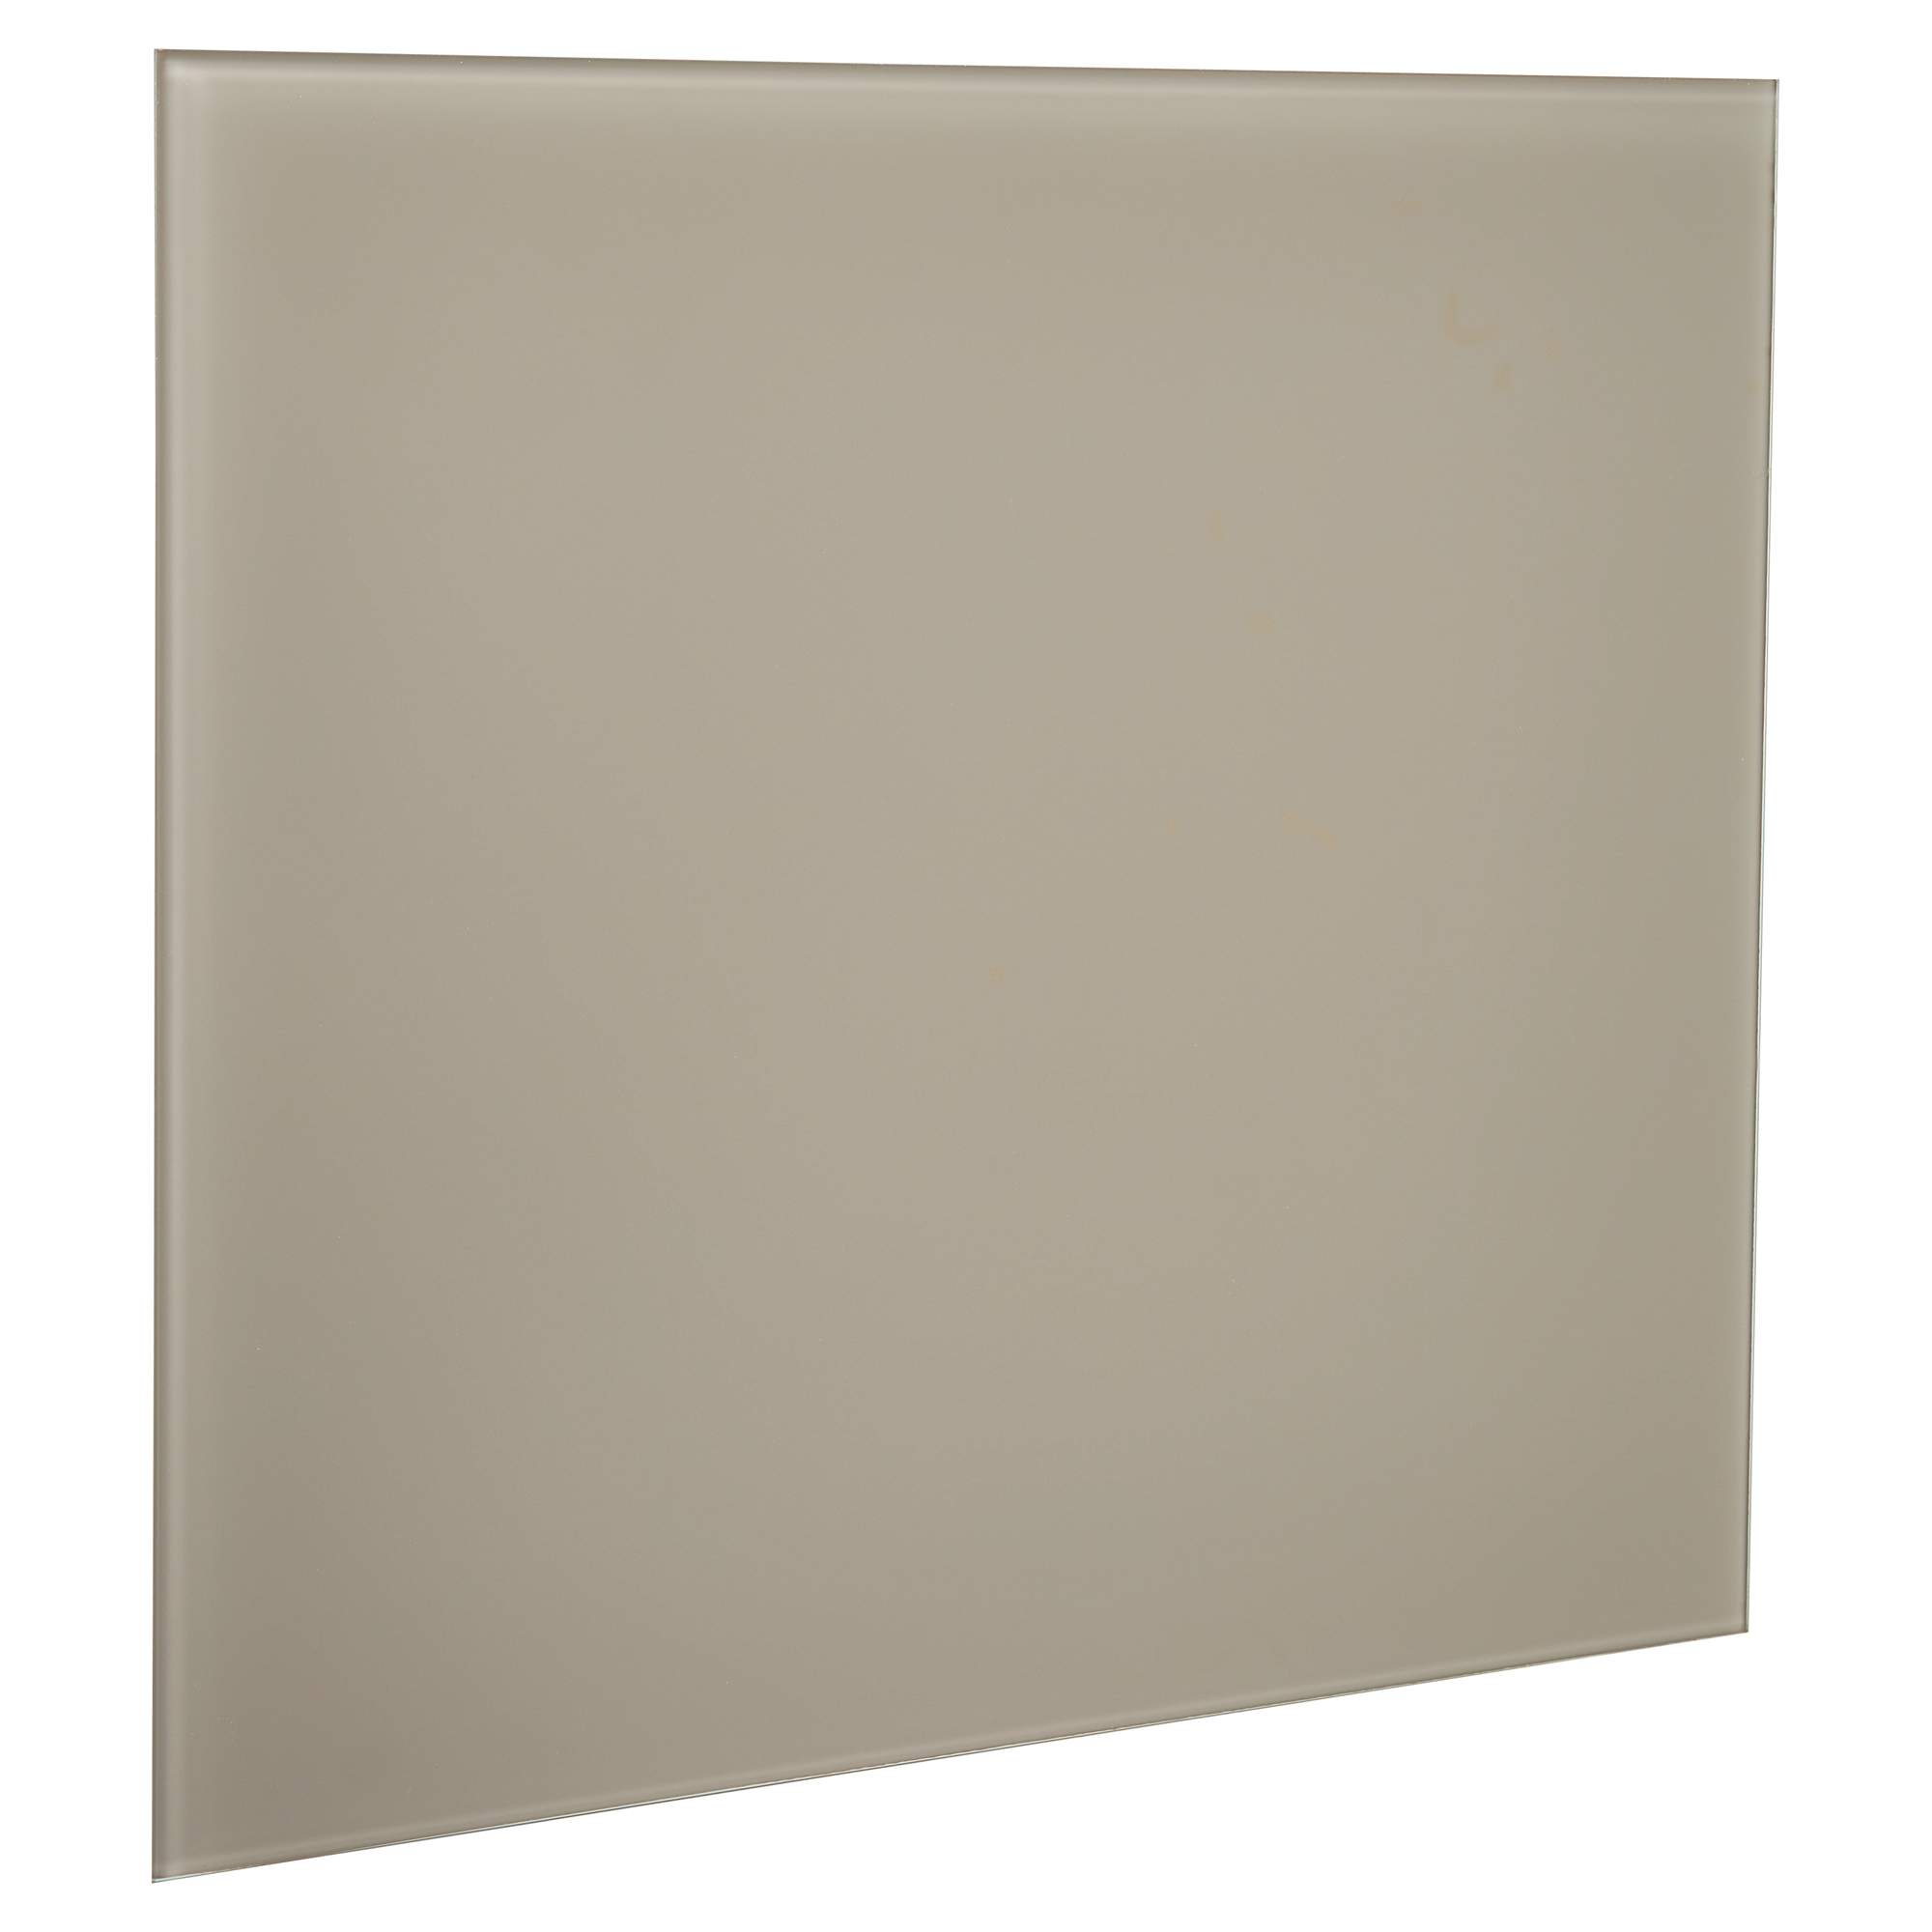 Memoboard beschreibbar beige 50 x 50 cm + product picture